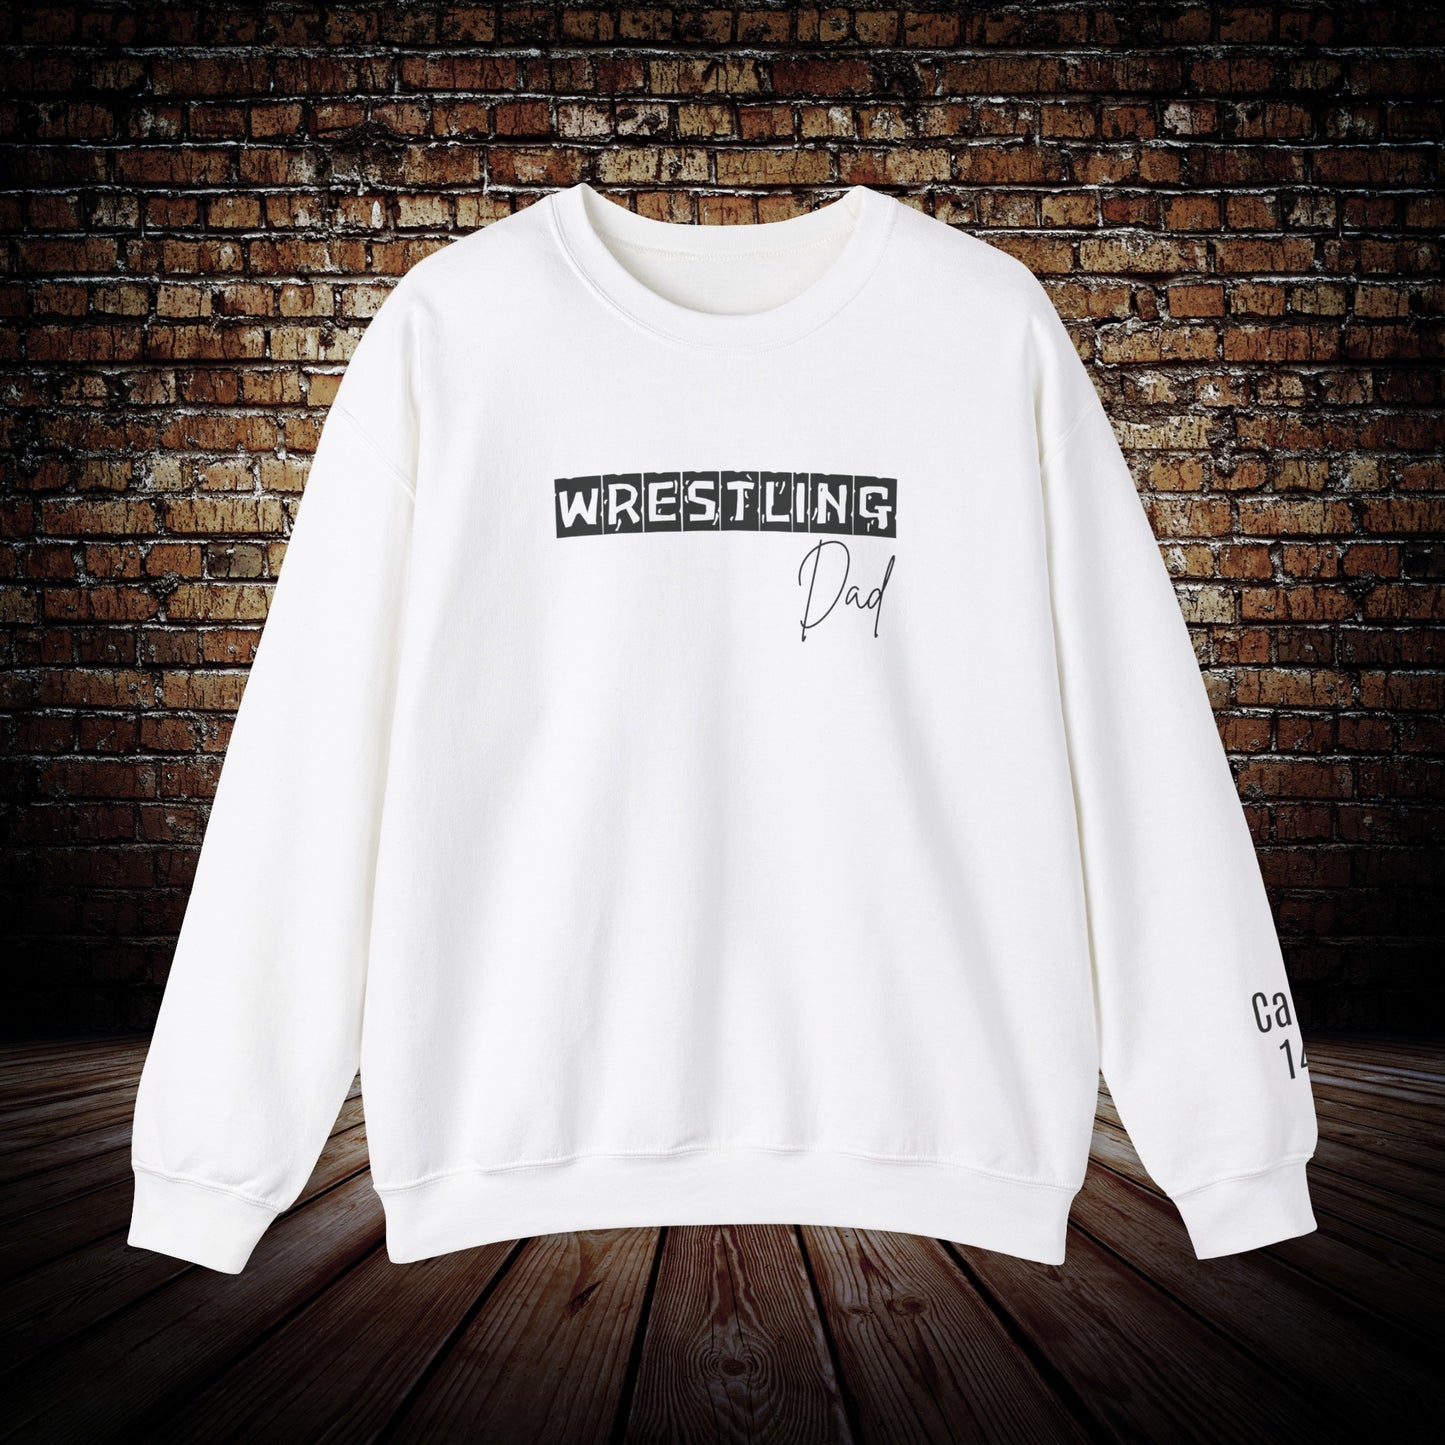 Wrestling Dad Sweatshirt